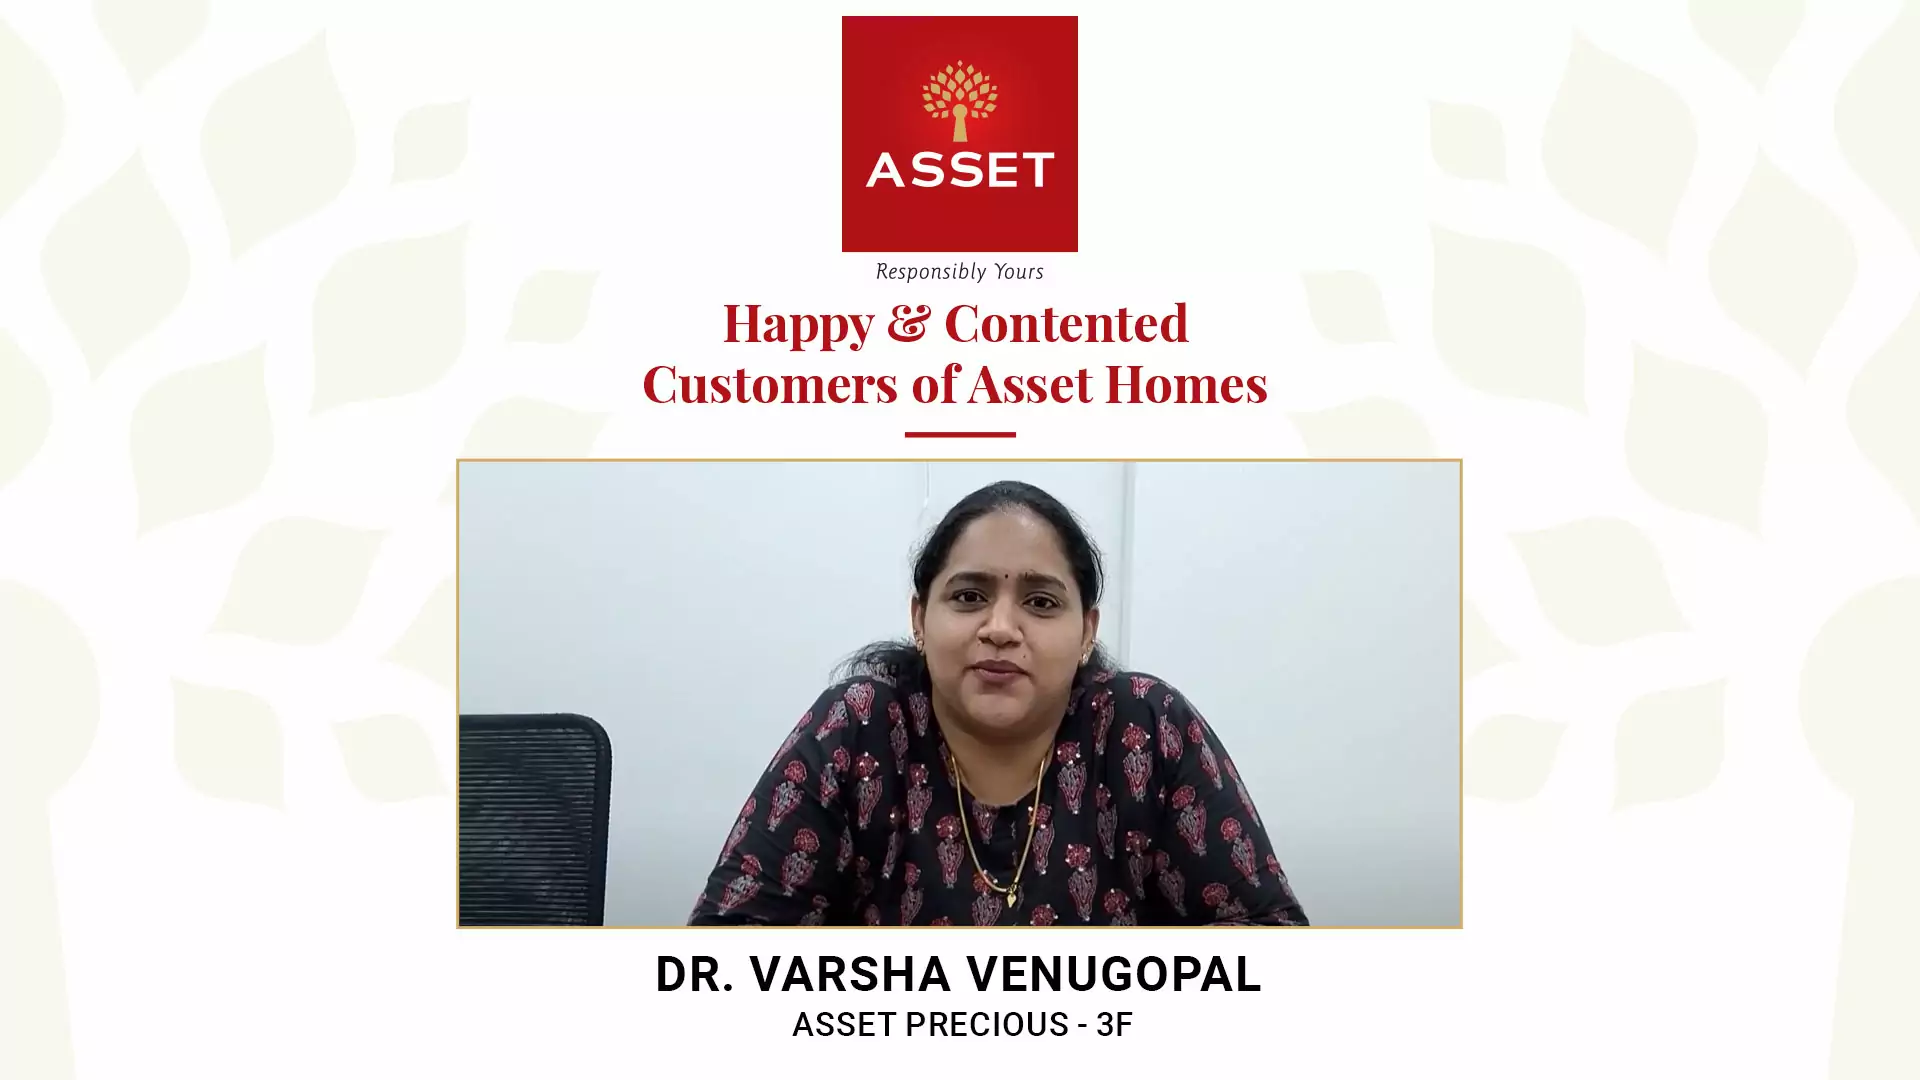 Dr. Varsha Venugopal, Asset Precious – 3F